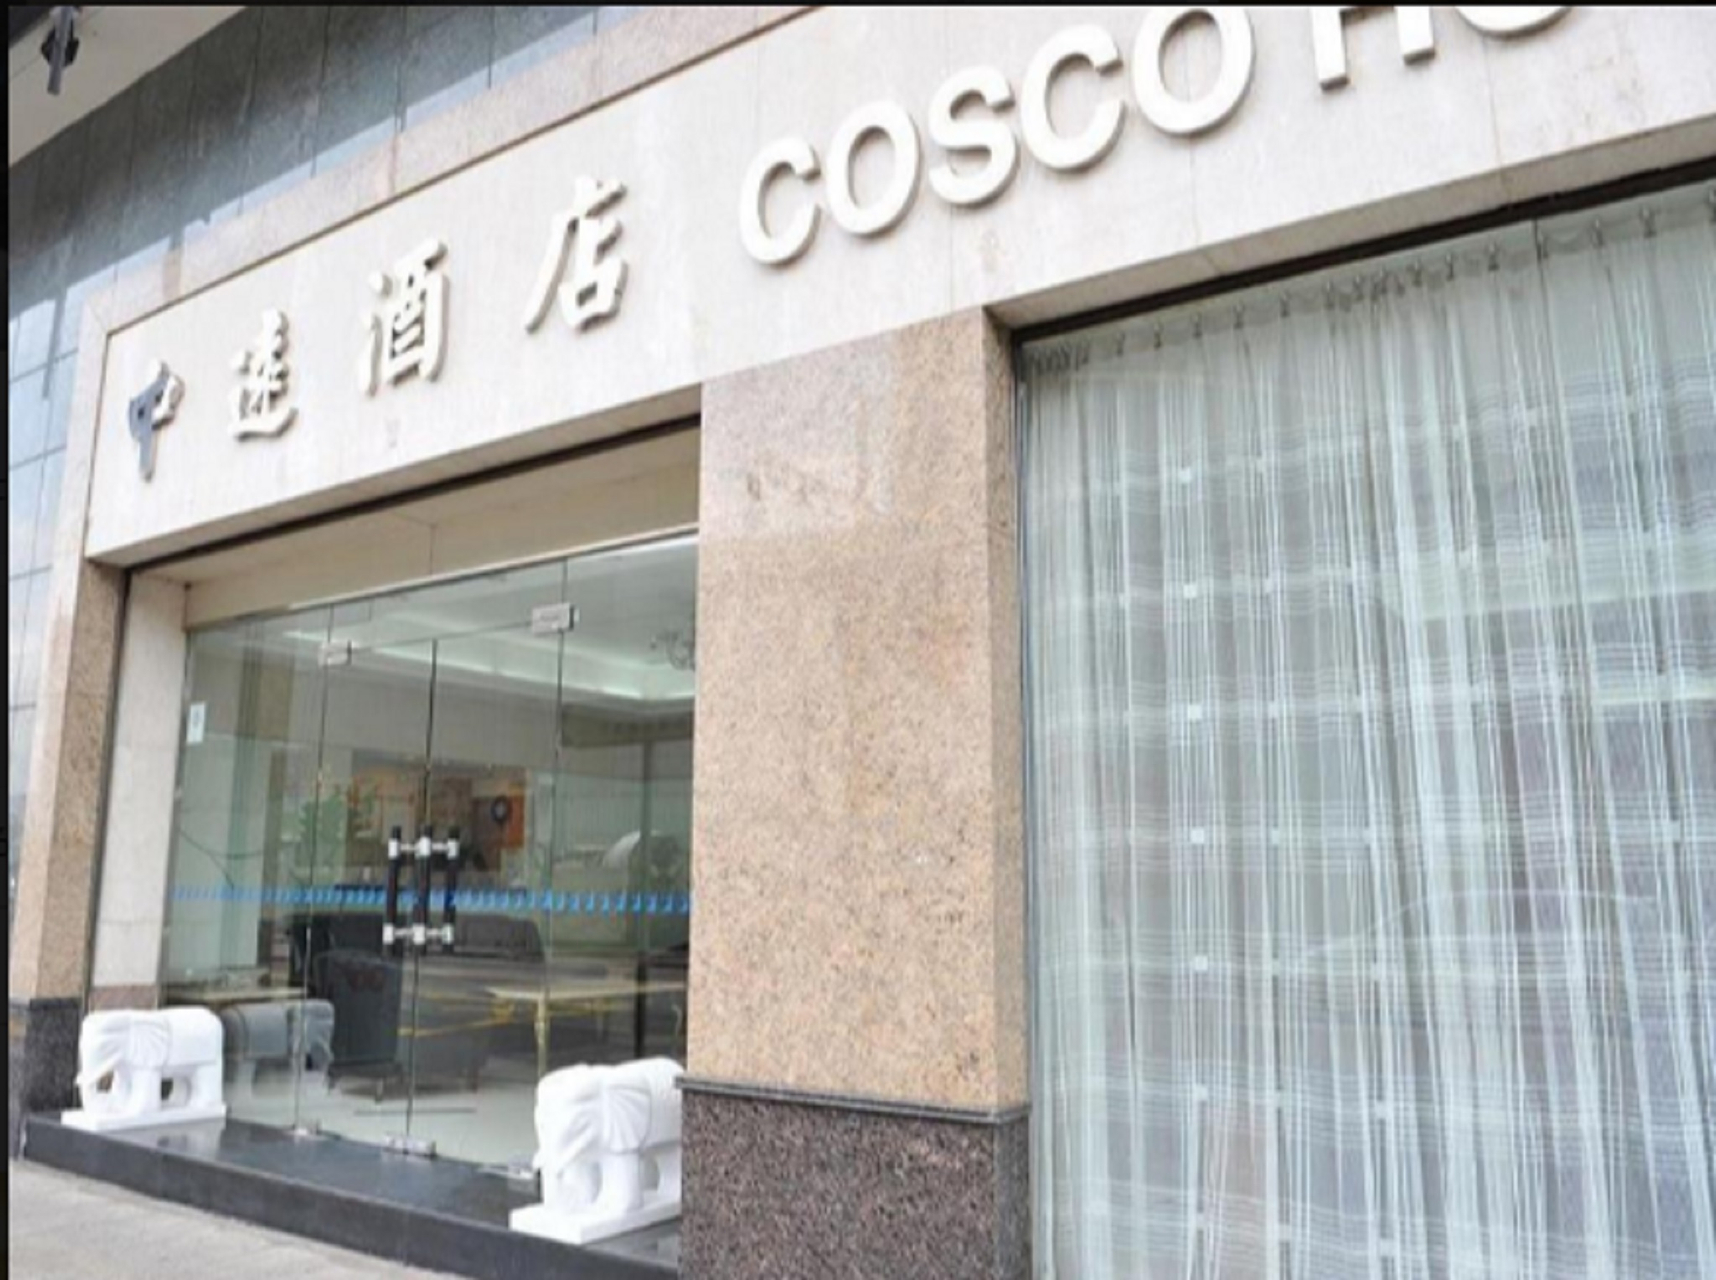 Public Area 1, HK Cosco Inn(Former Cosco Hotel), Central and Western